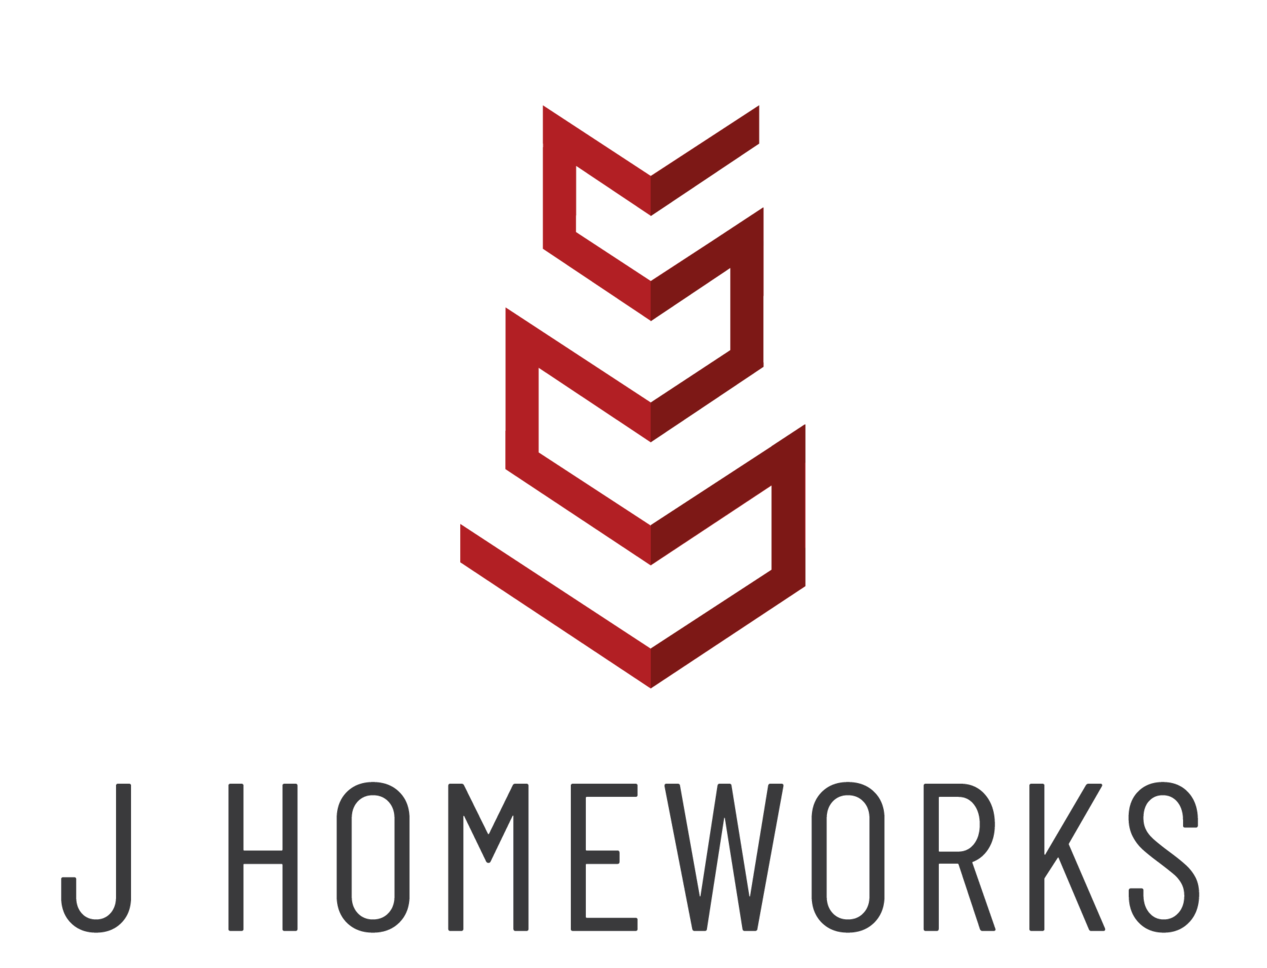 Jhomeworks logo